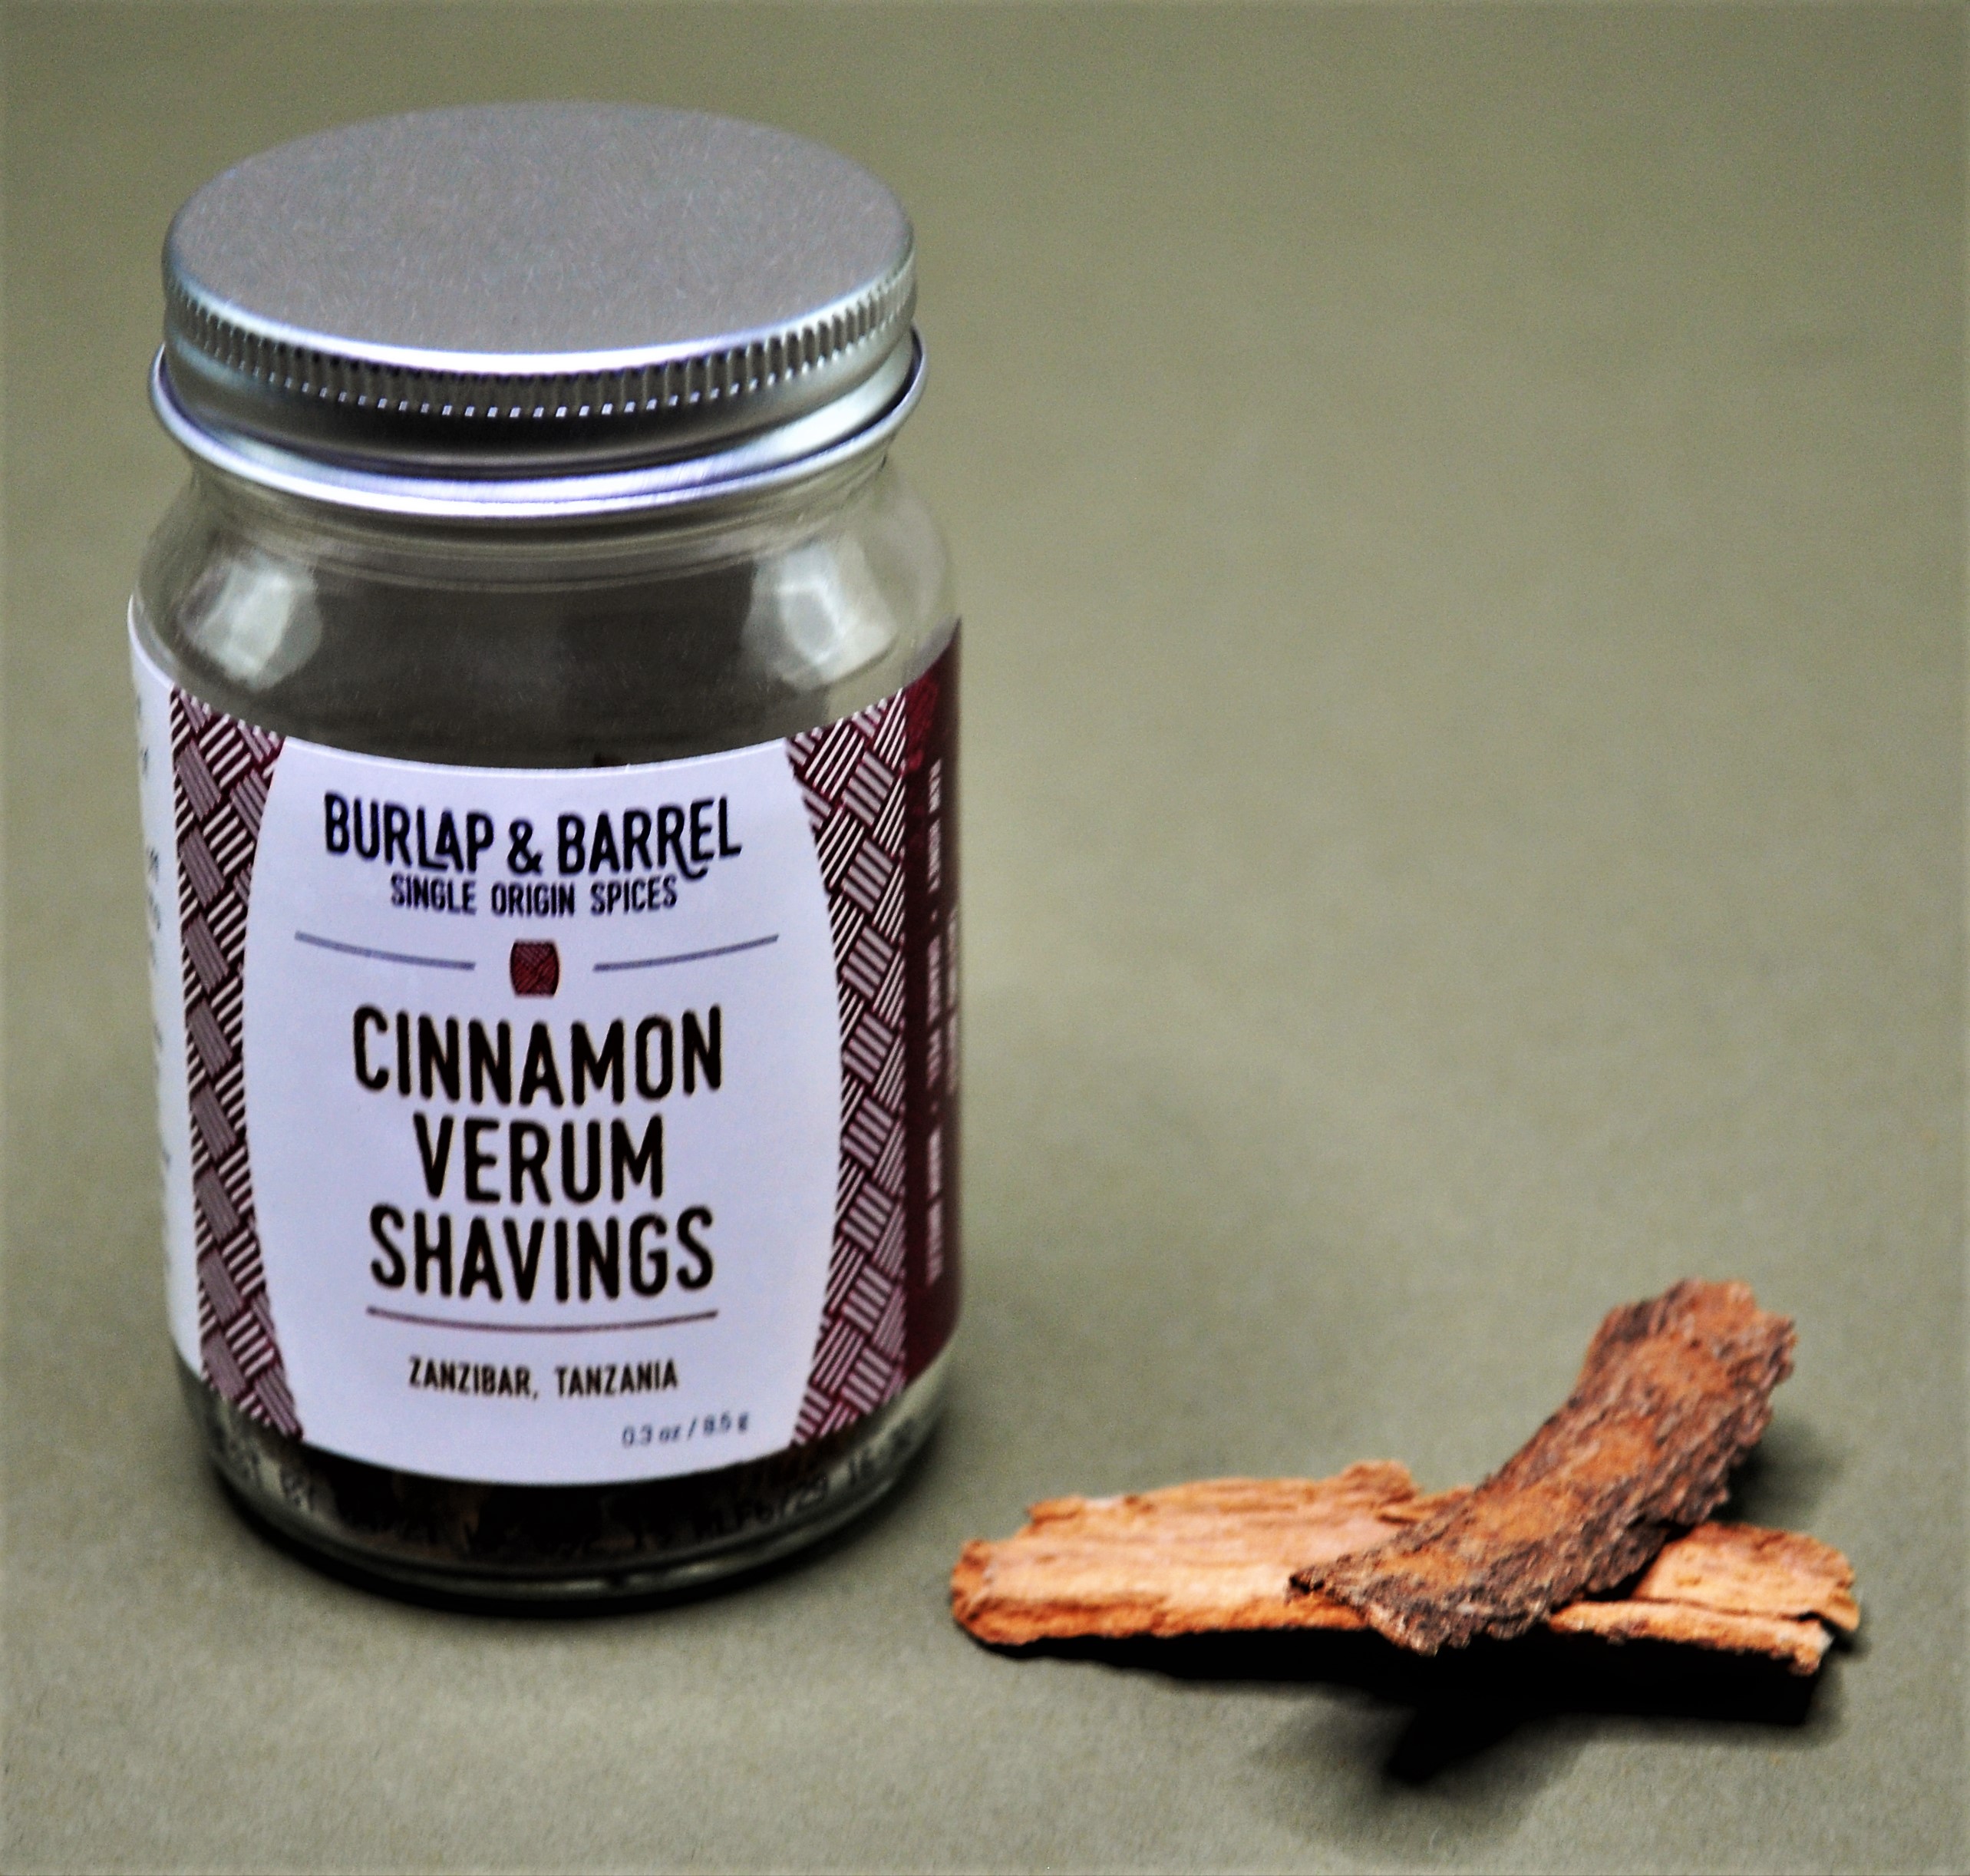 Burlap & Barrel Cinnamon Verum Shavings